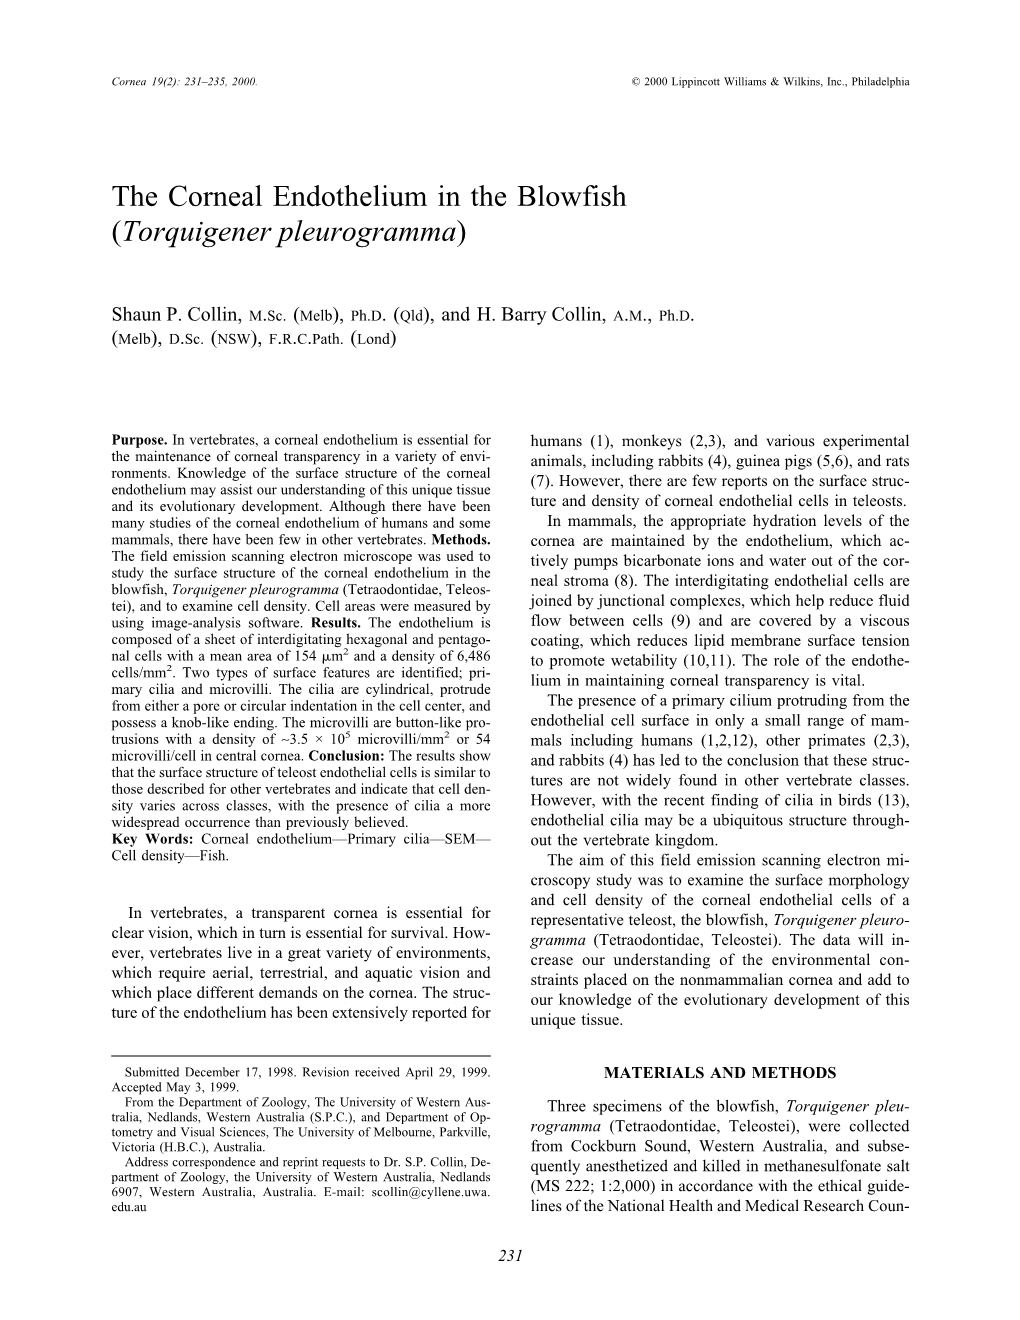 The Corneal Endothelium in the Blowfish (Torquigener Pleurogramma)